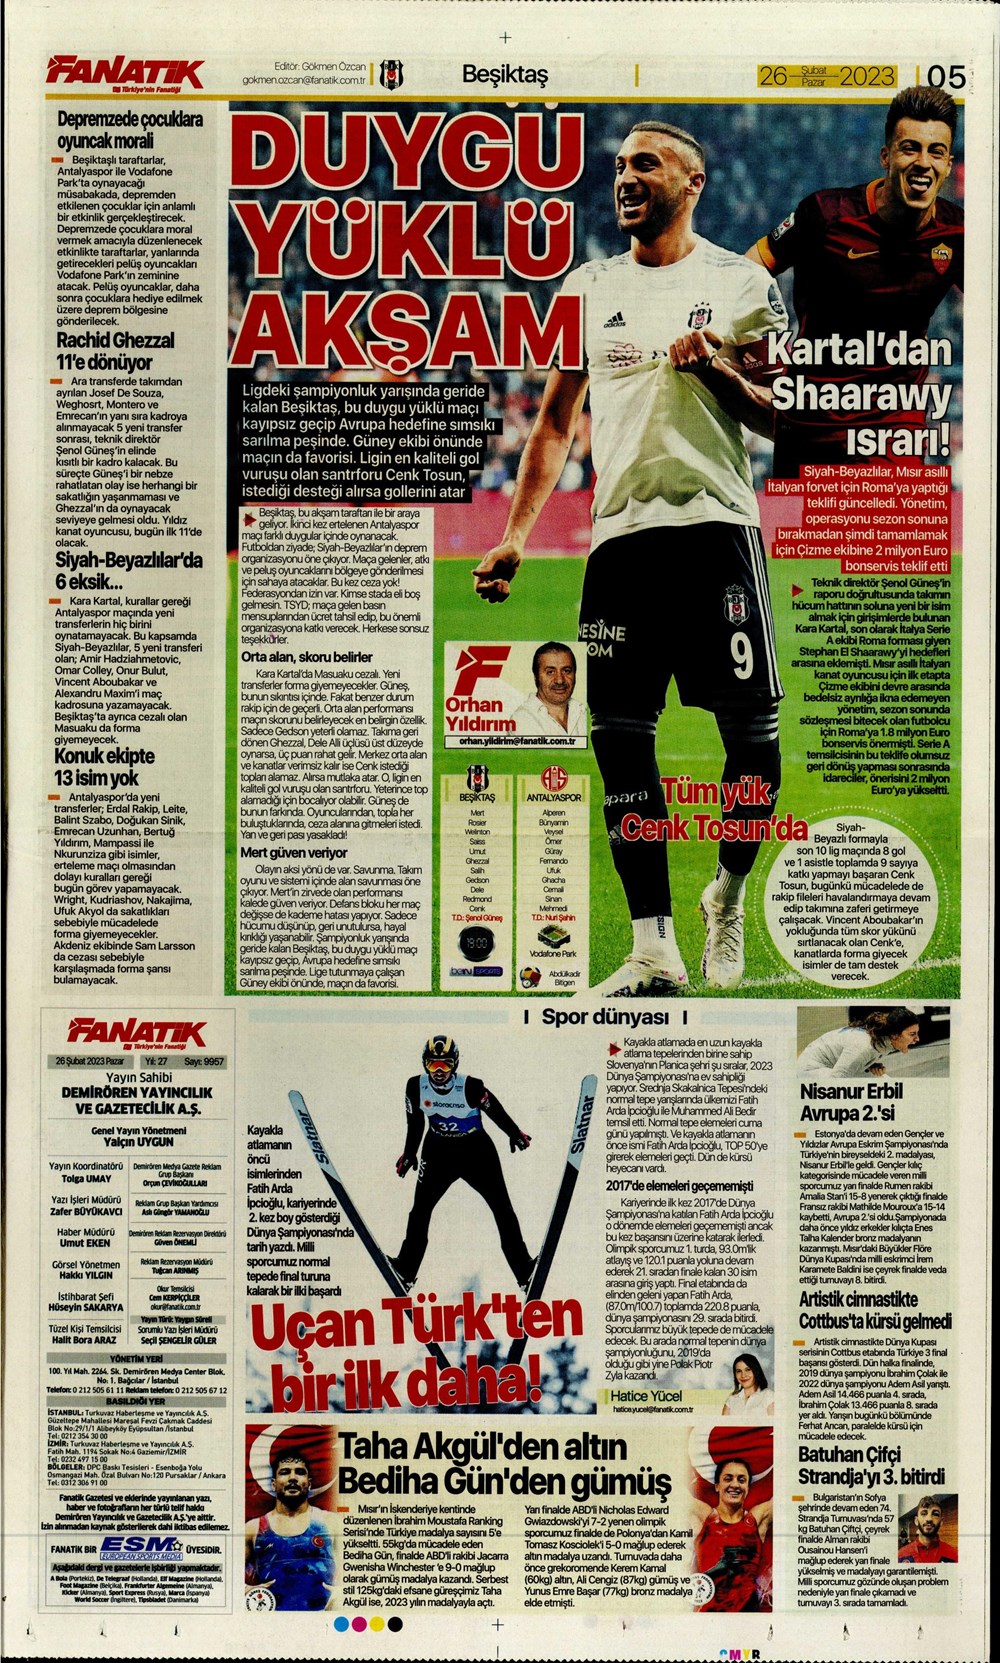 "Valenci'ağa' böyle istedi" - Sporun manşetleri  - 9. Foto